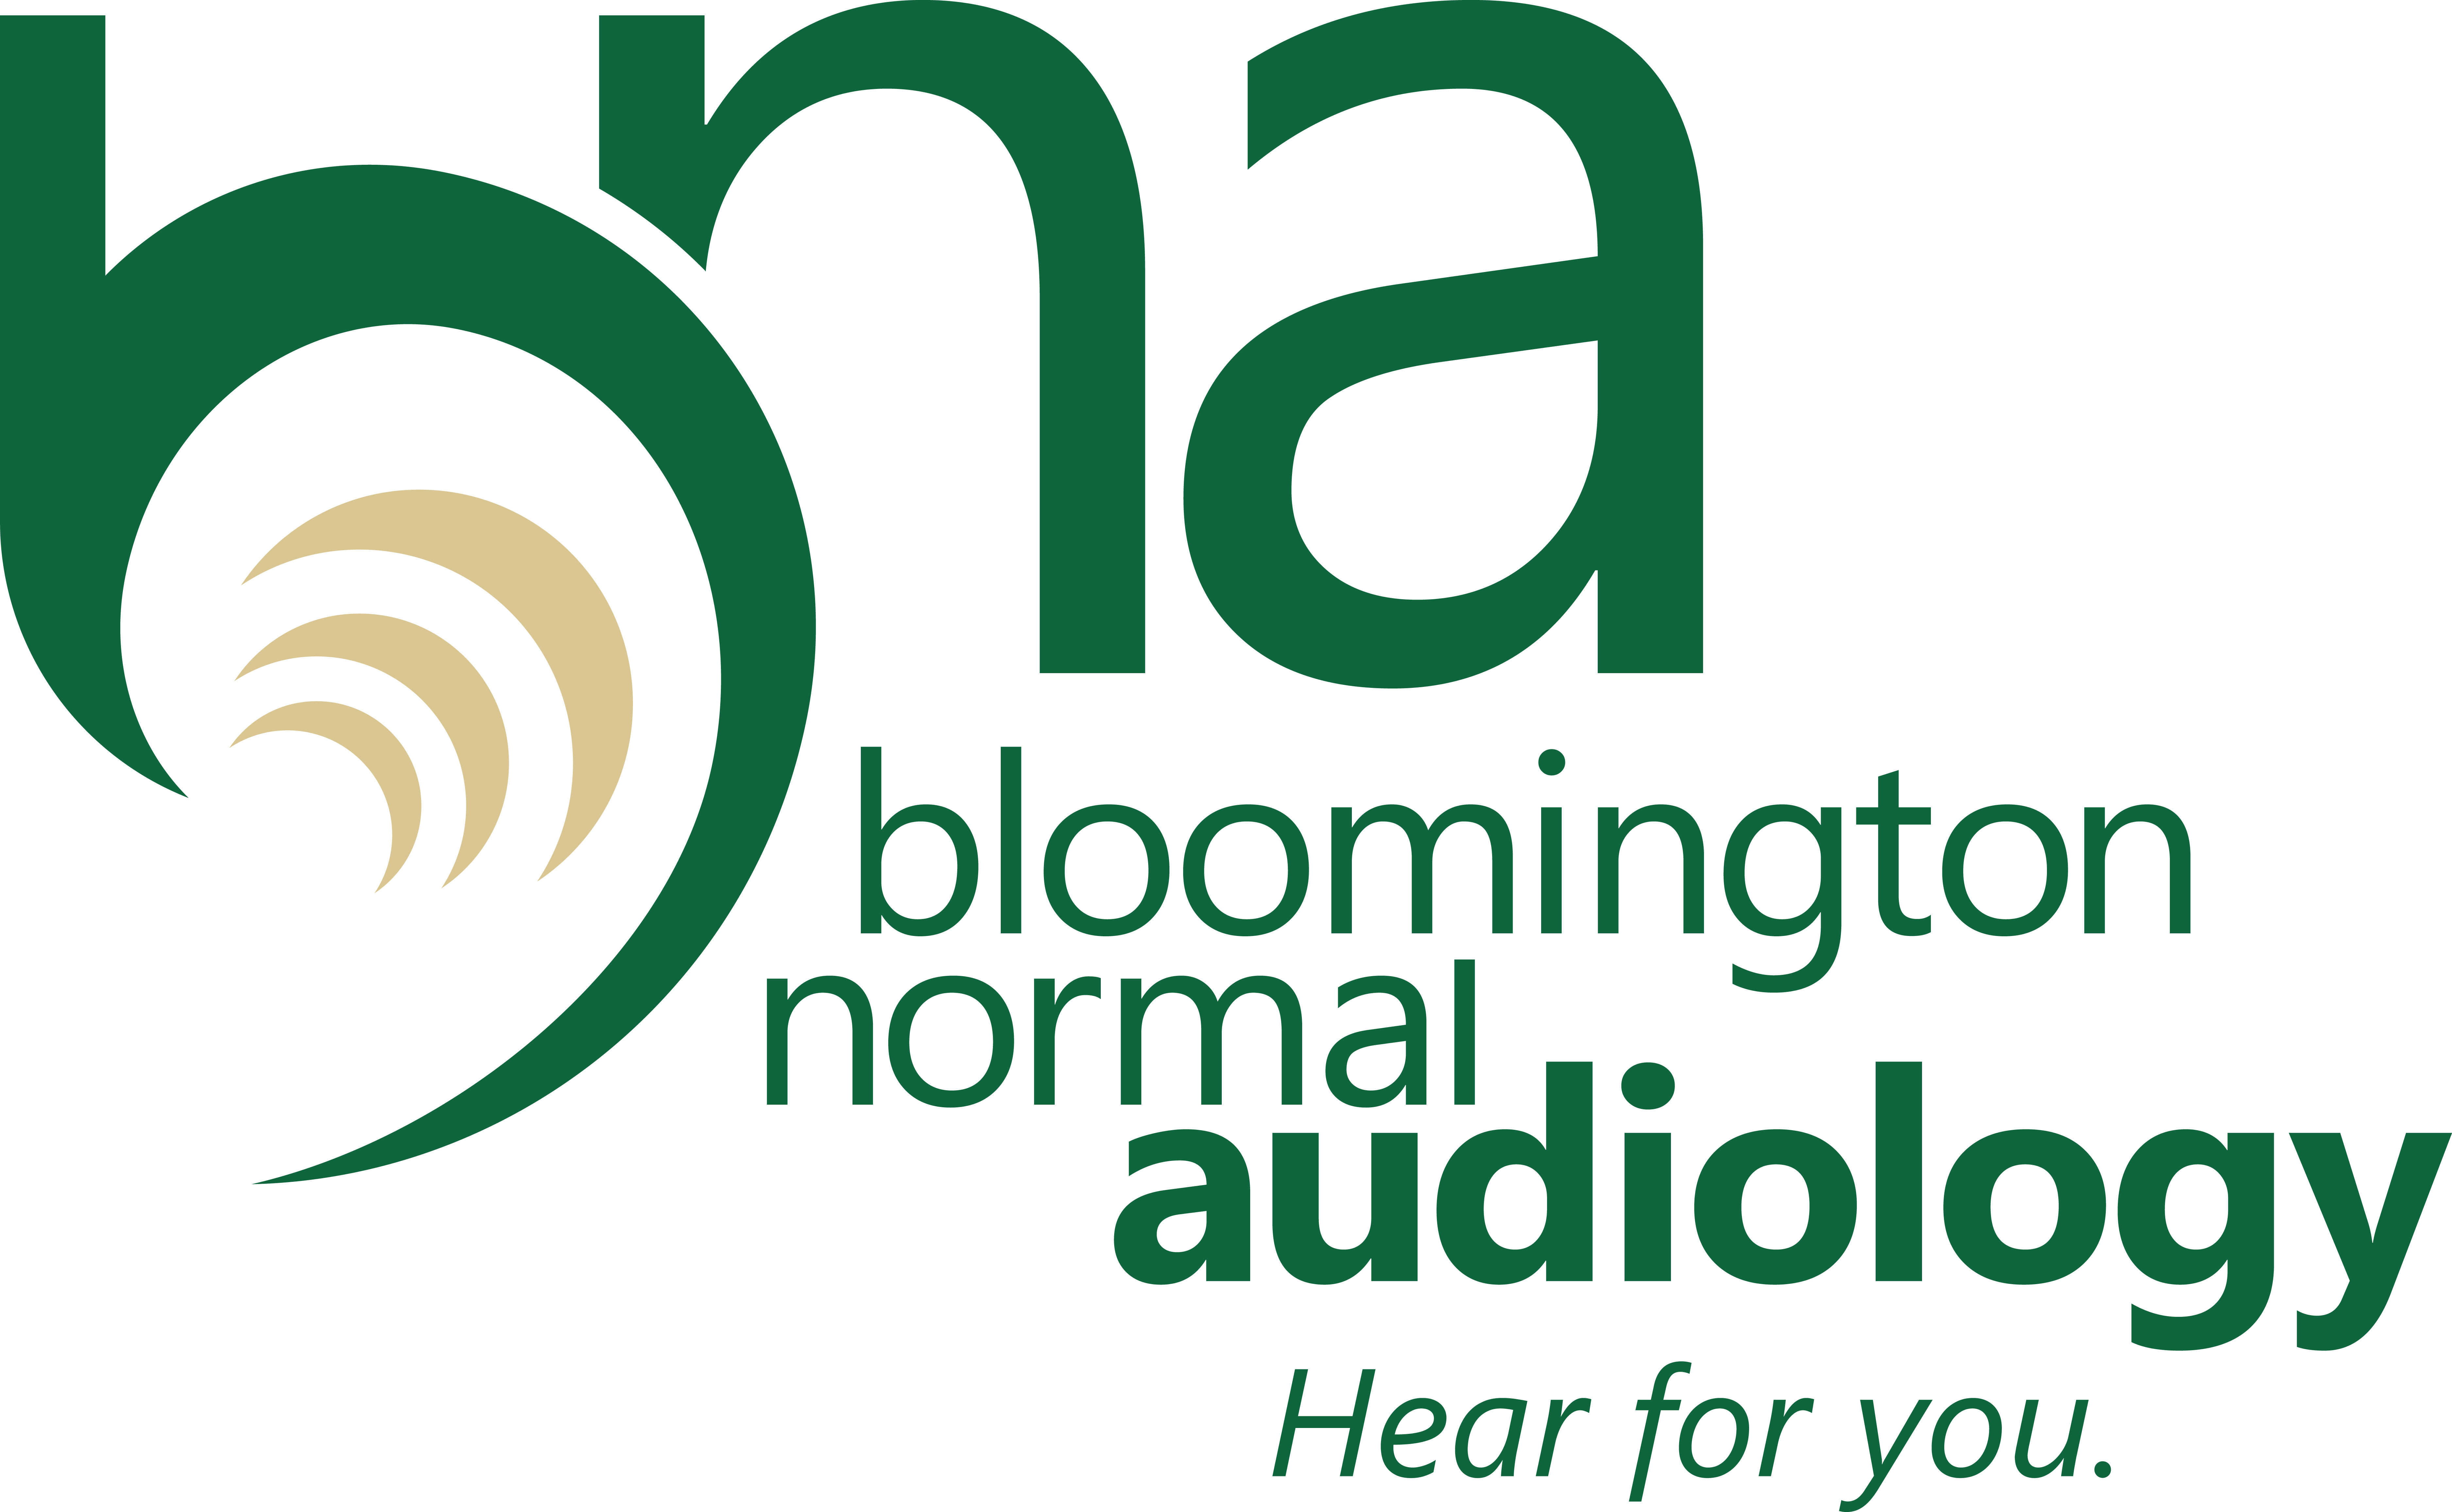 3Bloomington-Normal Audiology